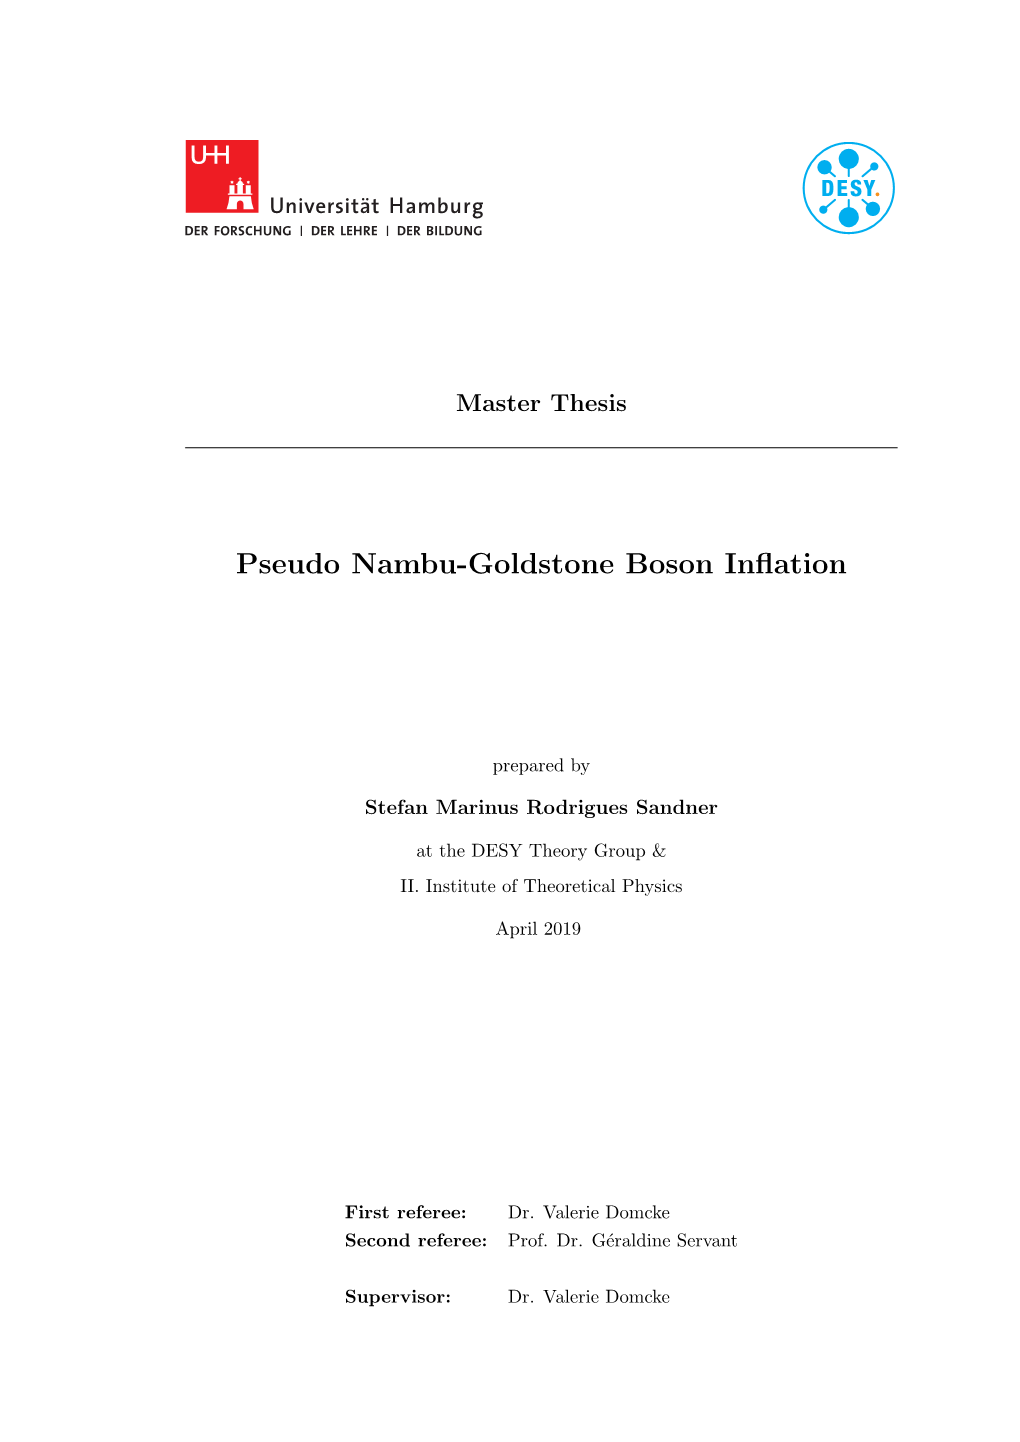 Pseudo Nambu-Goldstone Boson Inflation